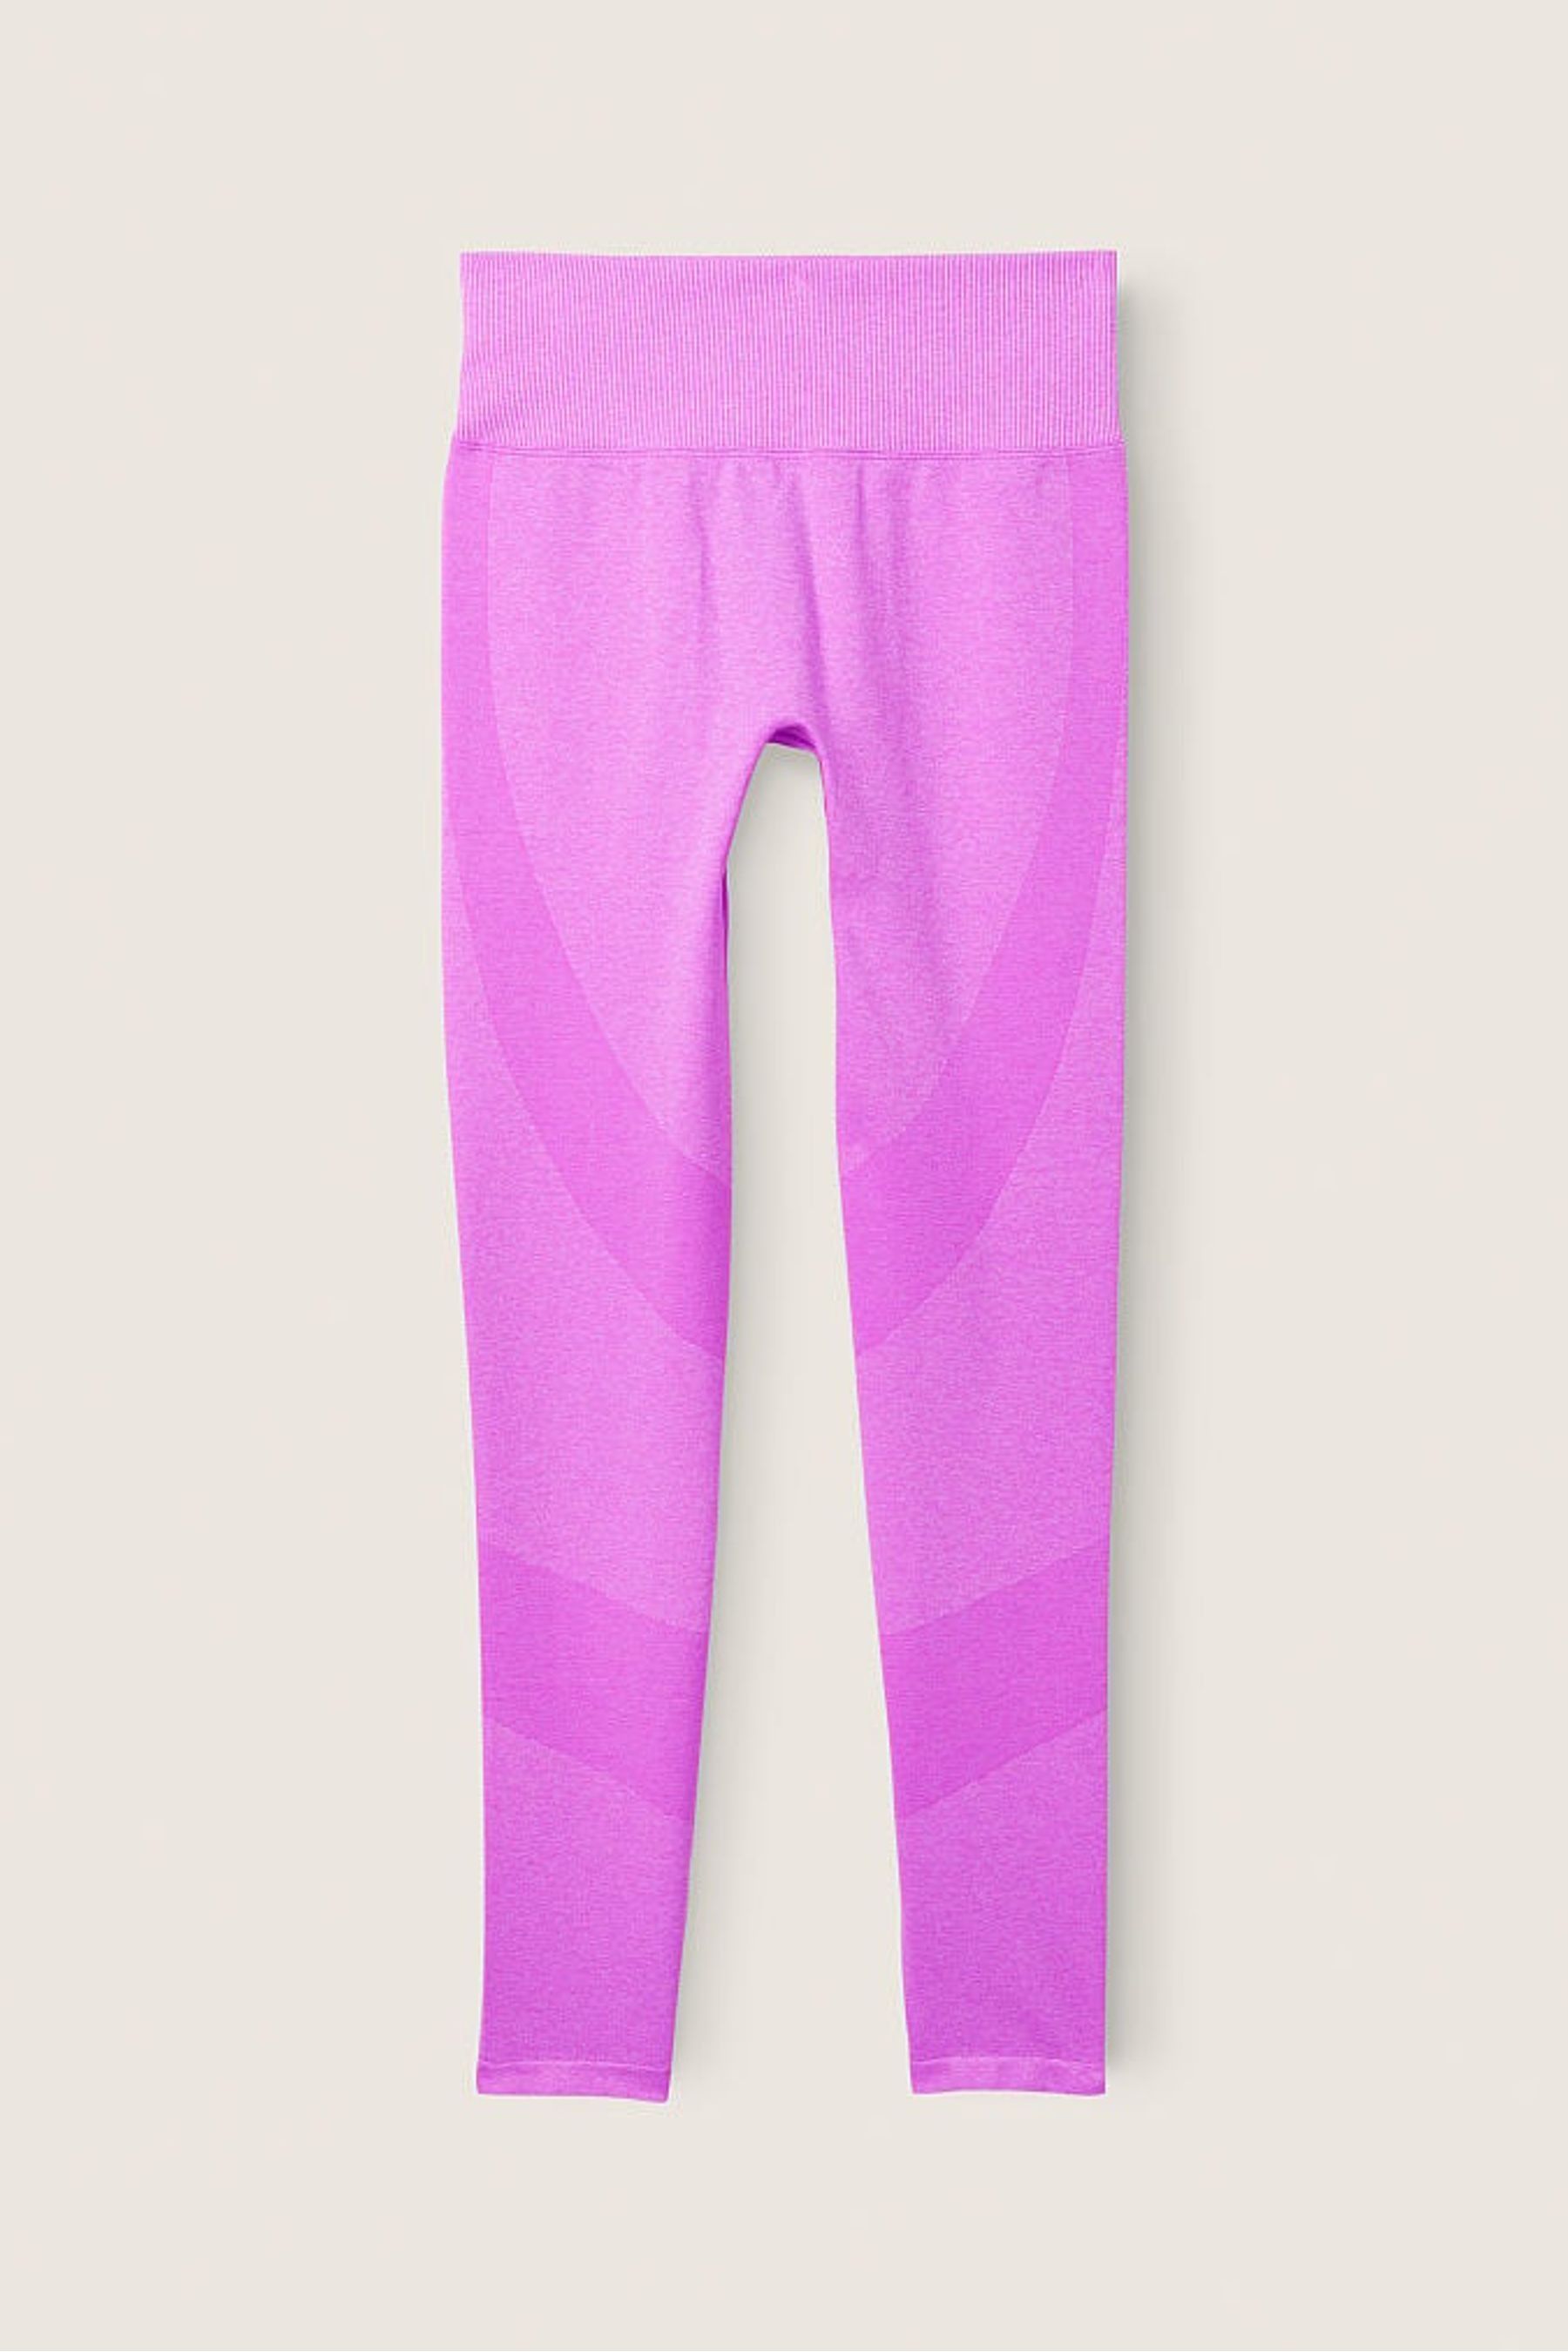 Buy Victoria S Secret Pink Seamless High Waist Legging From The Victoria S Secret Uk Online Shop